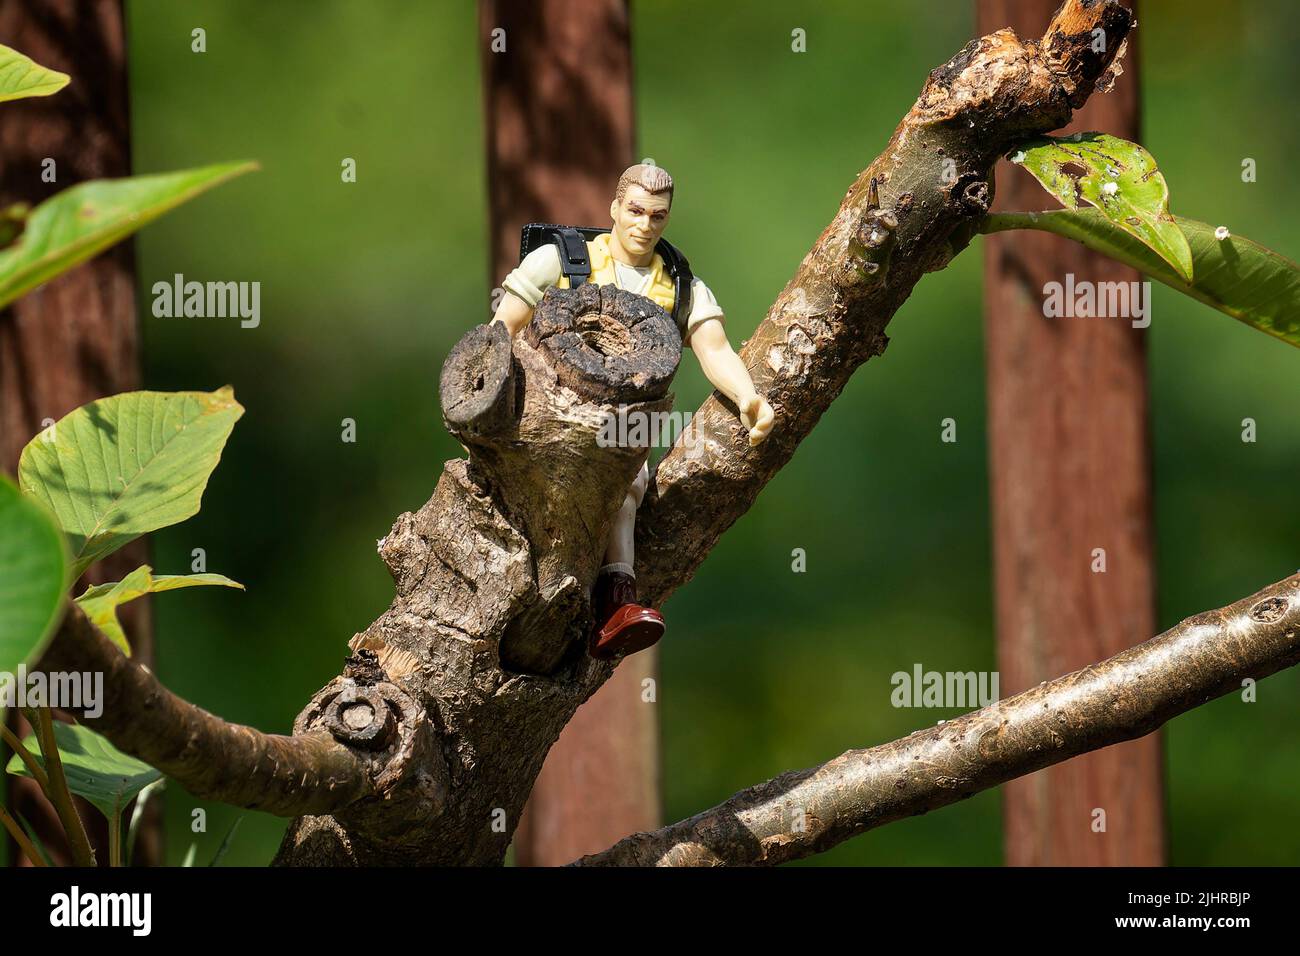 Strange figure climbing a tree Stock Photo